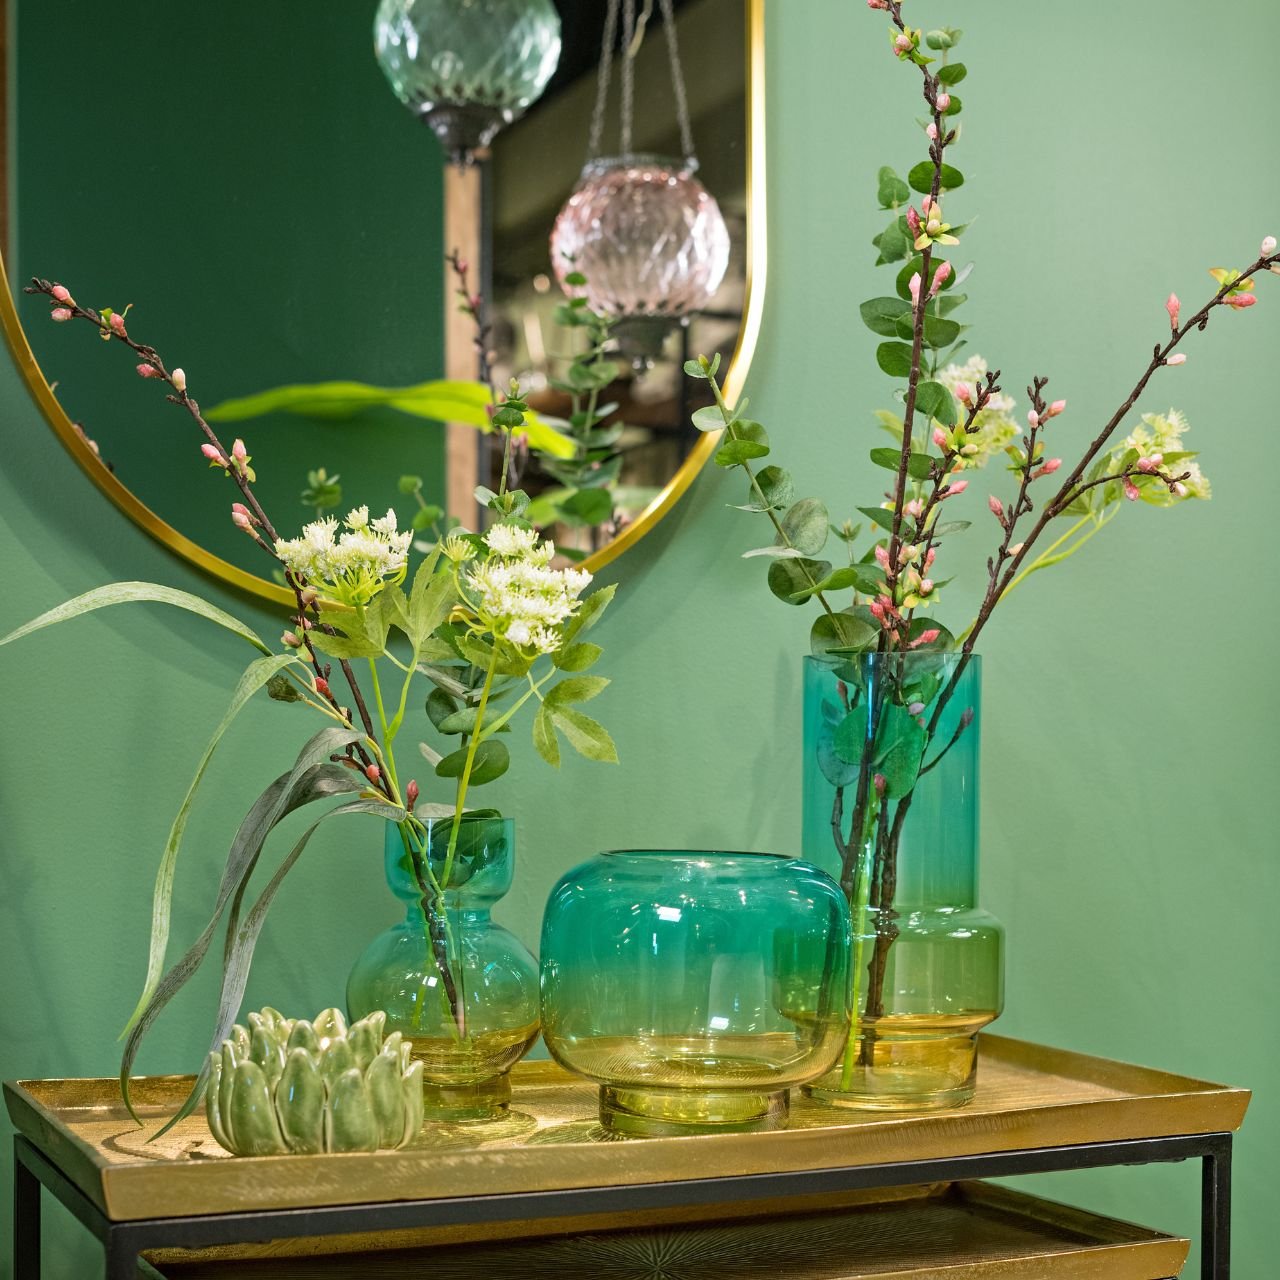 Vase aus Glas grün (B/H/T) 11x16x11cm